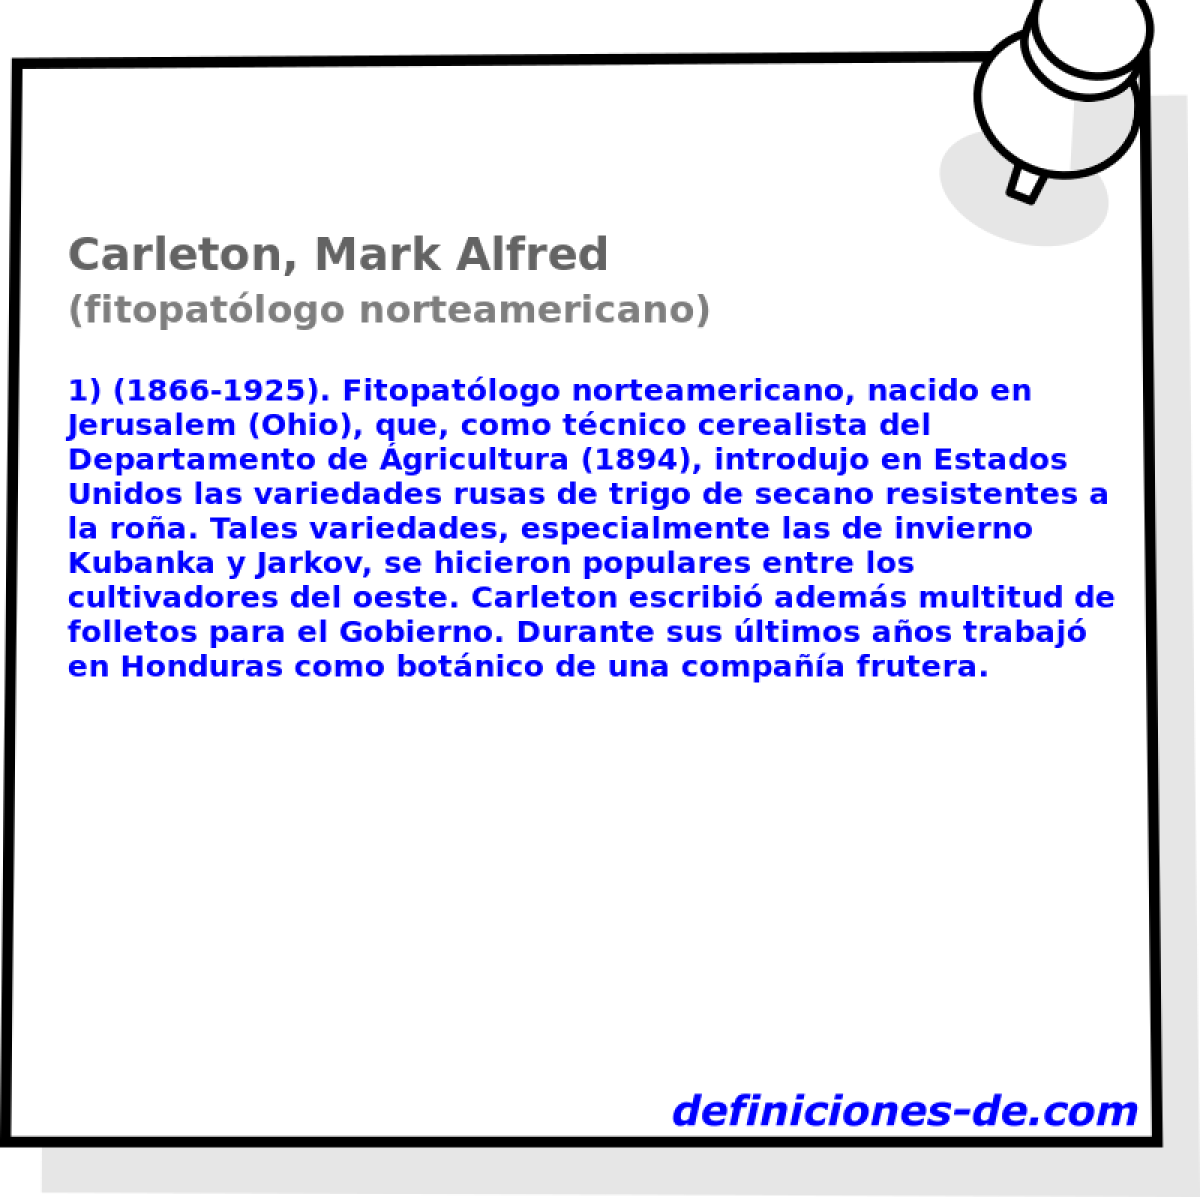 Carleton, Mark Alfred (fitopatlogo norteamericano)